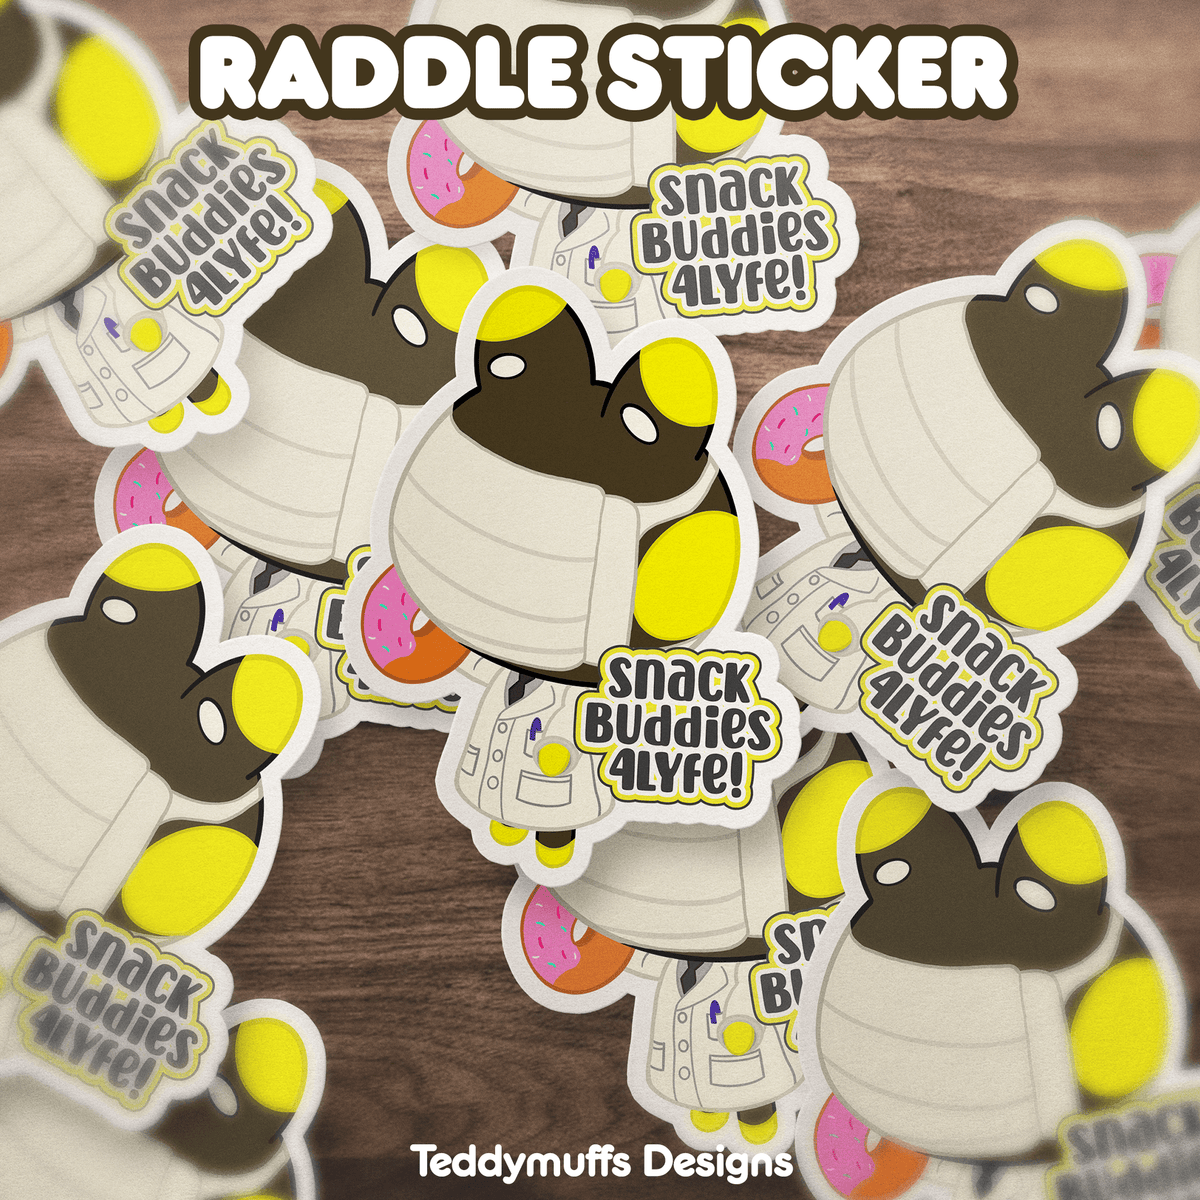 Raddle &quot;Snack Buddy&quot; Sticker - Teddymuffs Designs